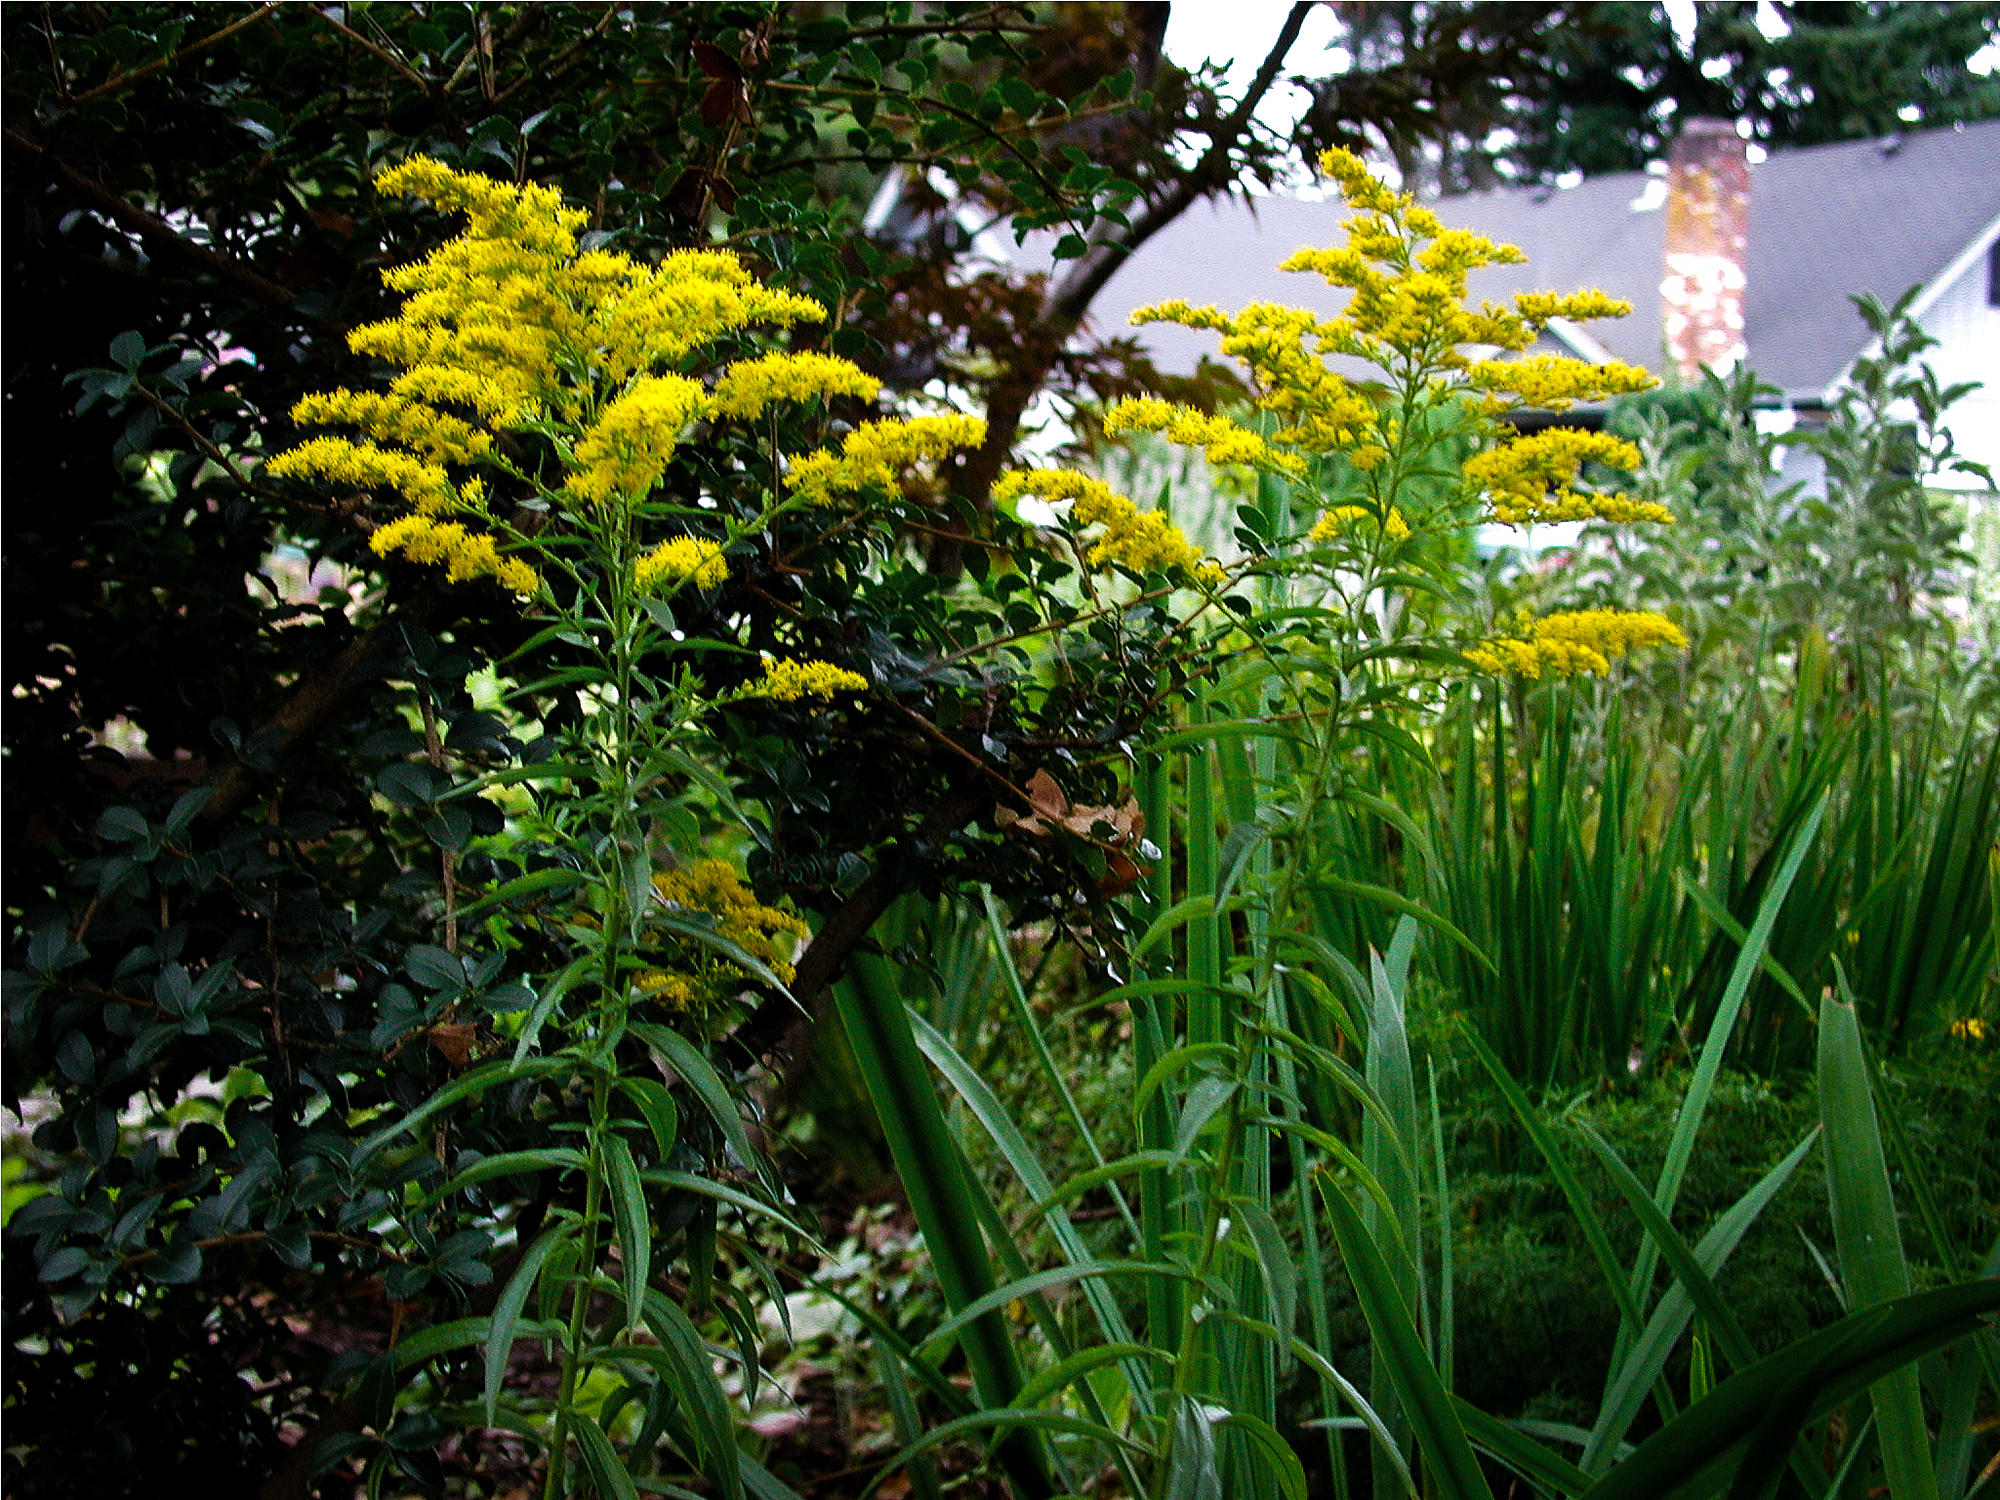 many tiny bright yellow flowers on green stalks